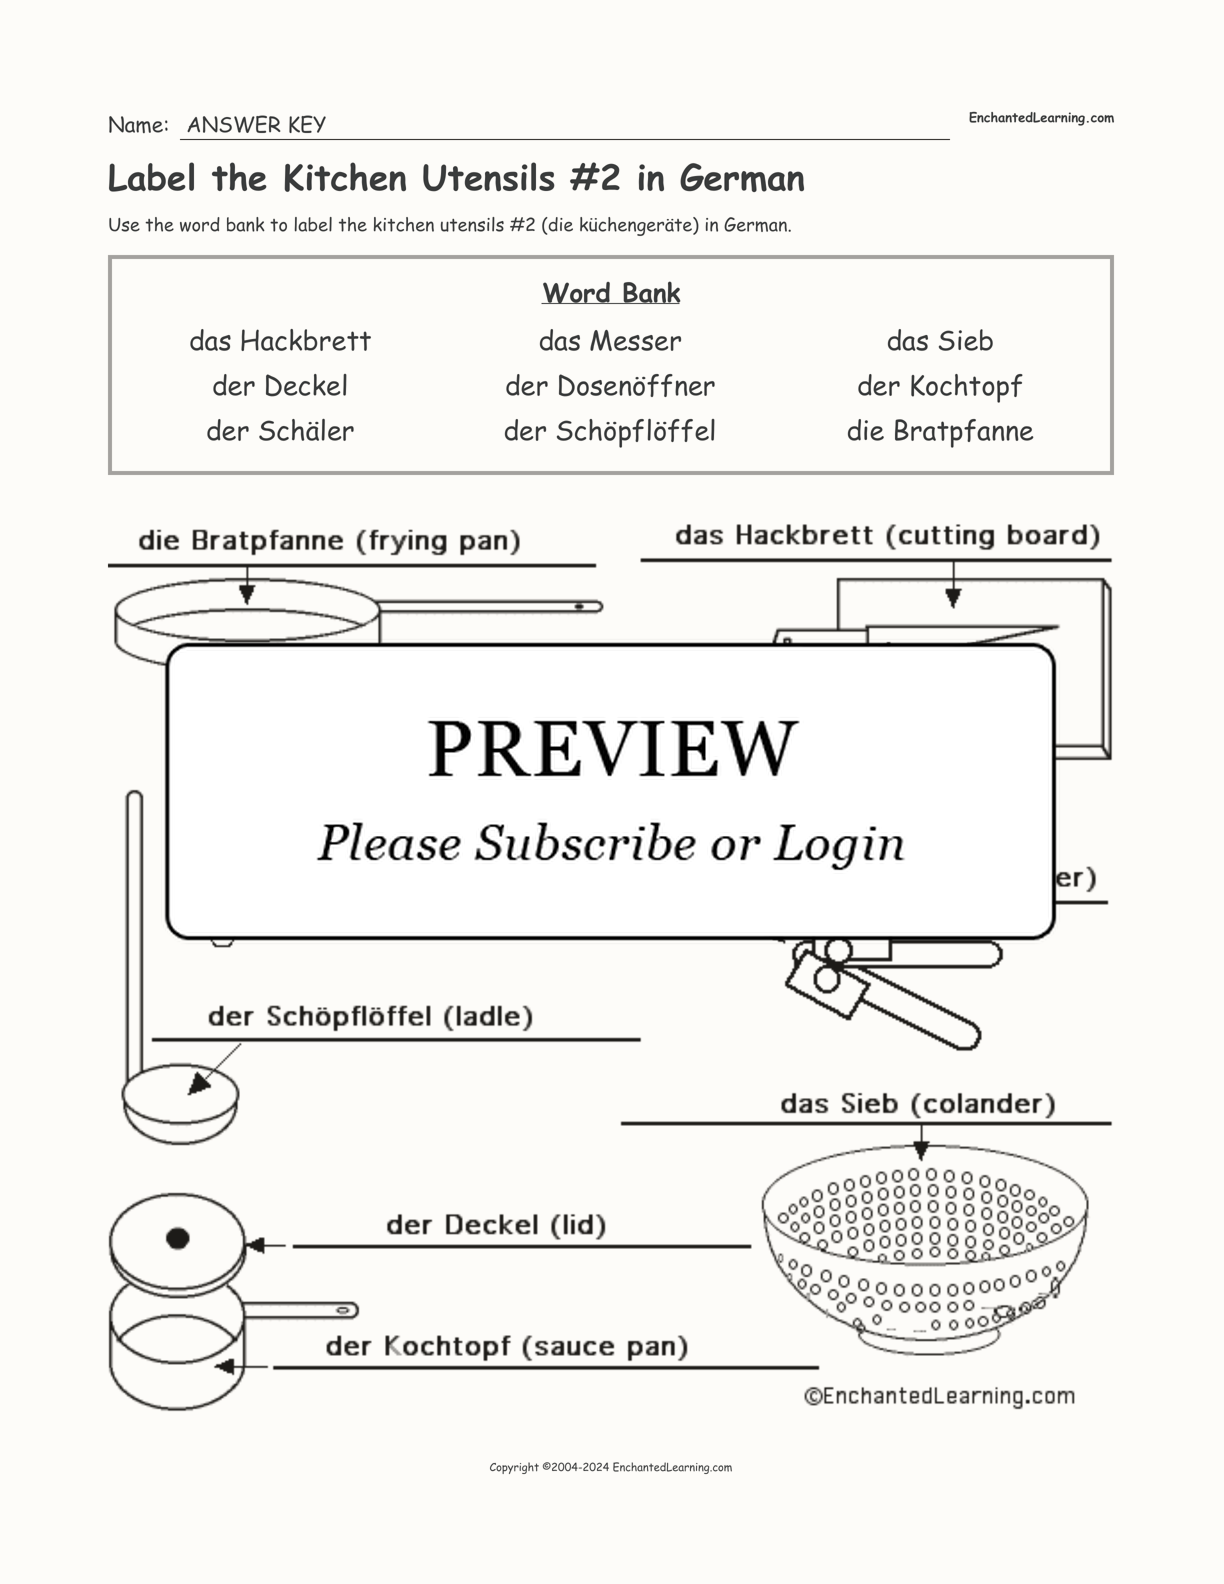 Label the Kitchen Utensils #2 in German interactive worksheet page 2